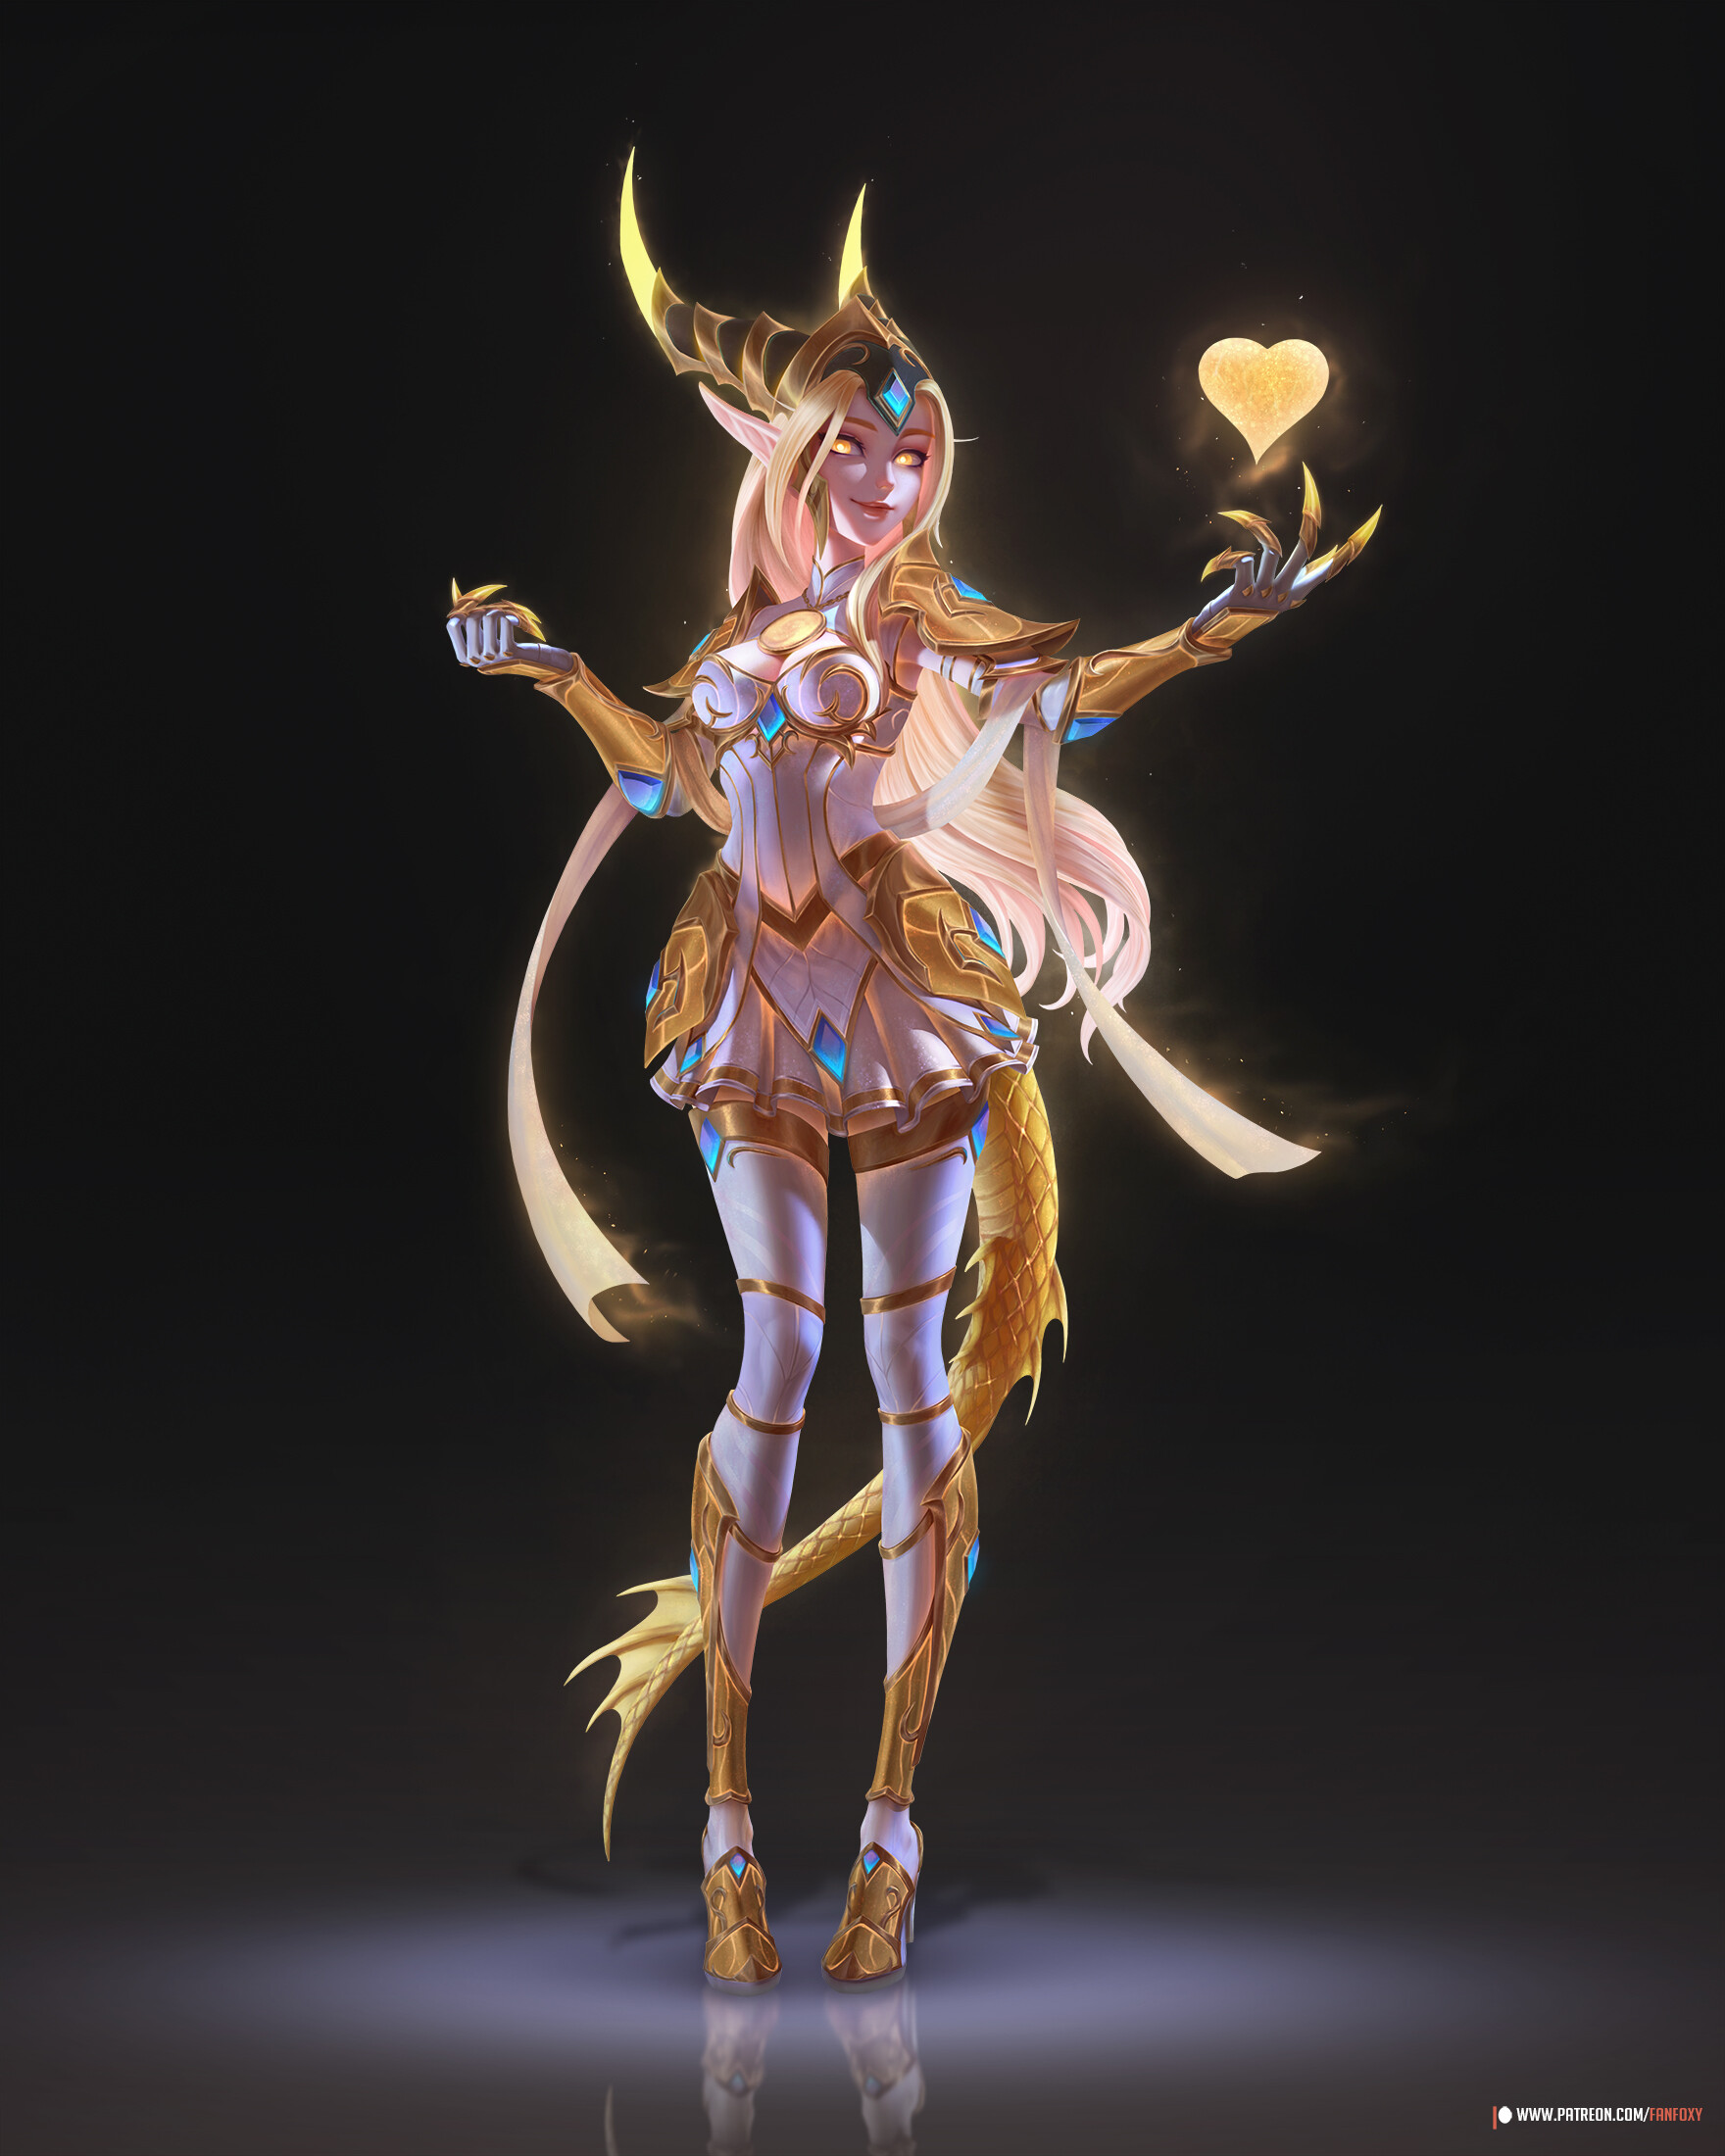 Fanfoxy Drawing Women Fantasy Art Warcraft Smiling Glowing Heart Design Magic Spell Yellow Eyes 1760x2200